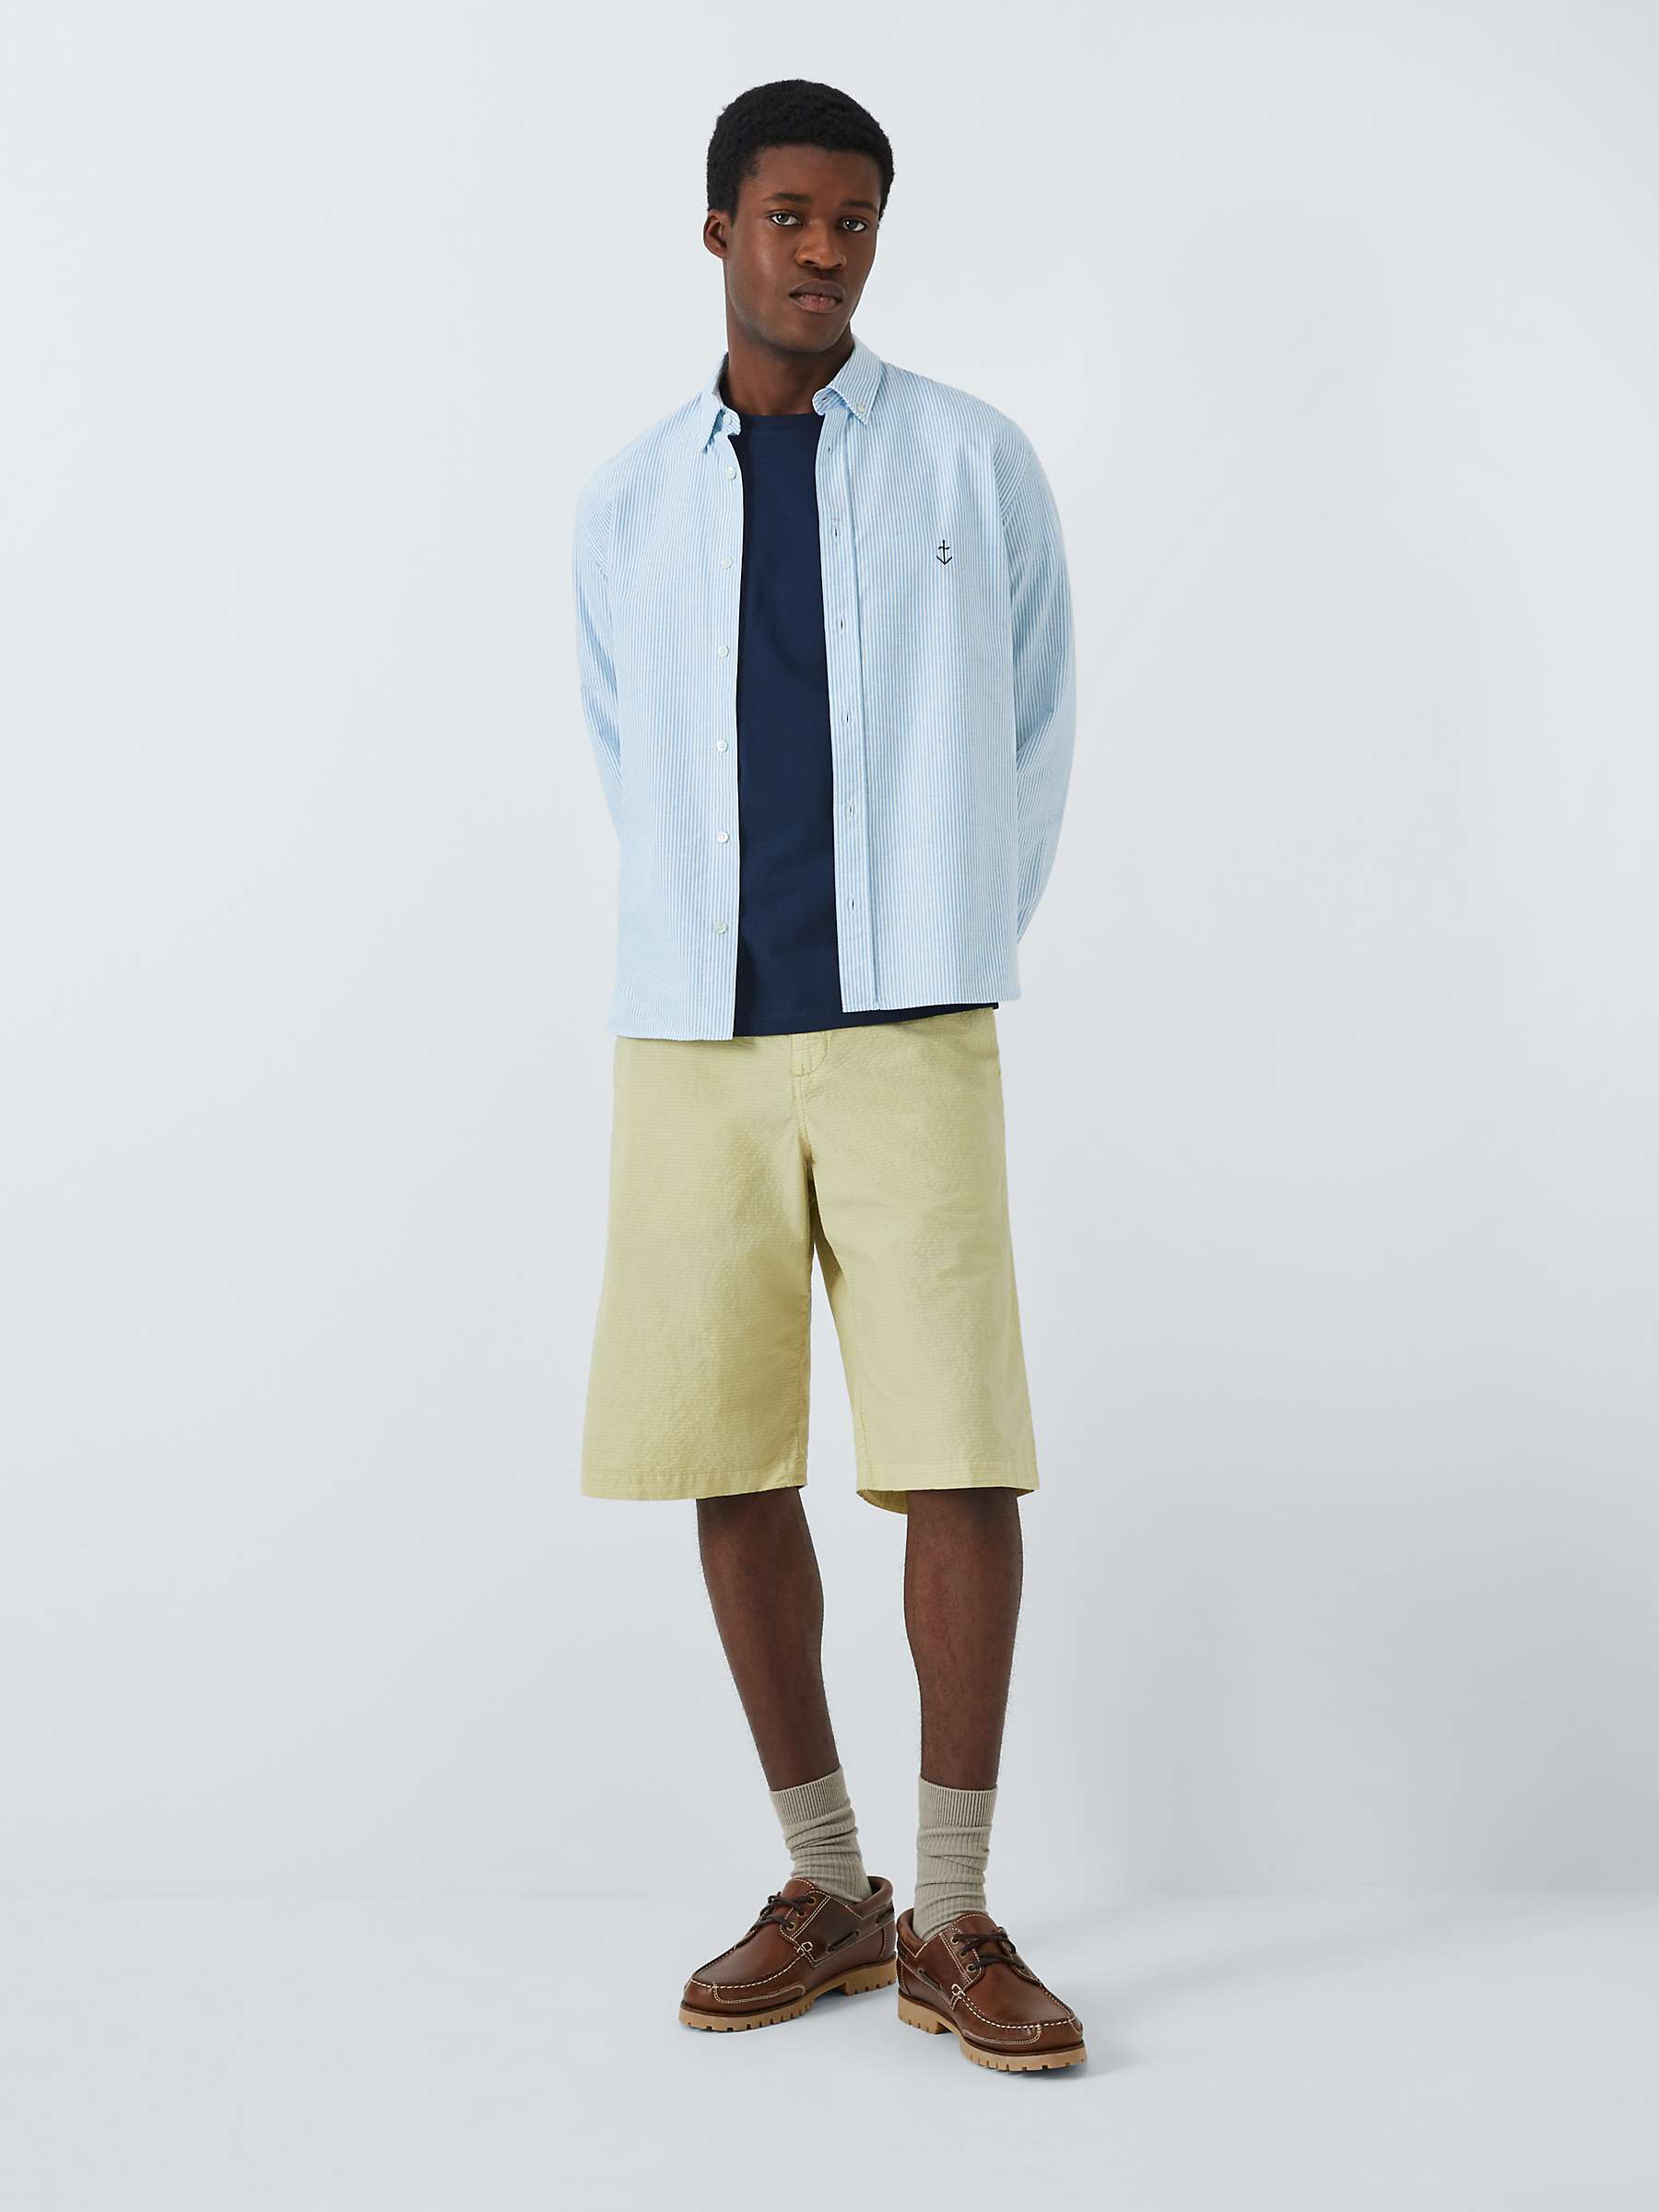 Buy La Paz Button Down Long Sleeve Stripe Shirt, Blue/White Online at johnlewis.com